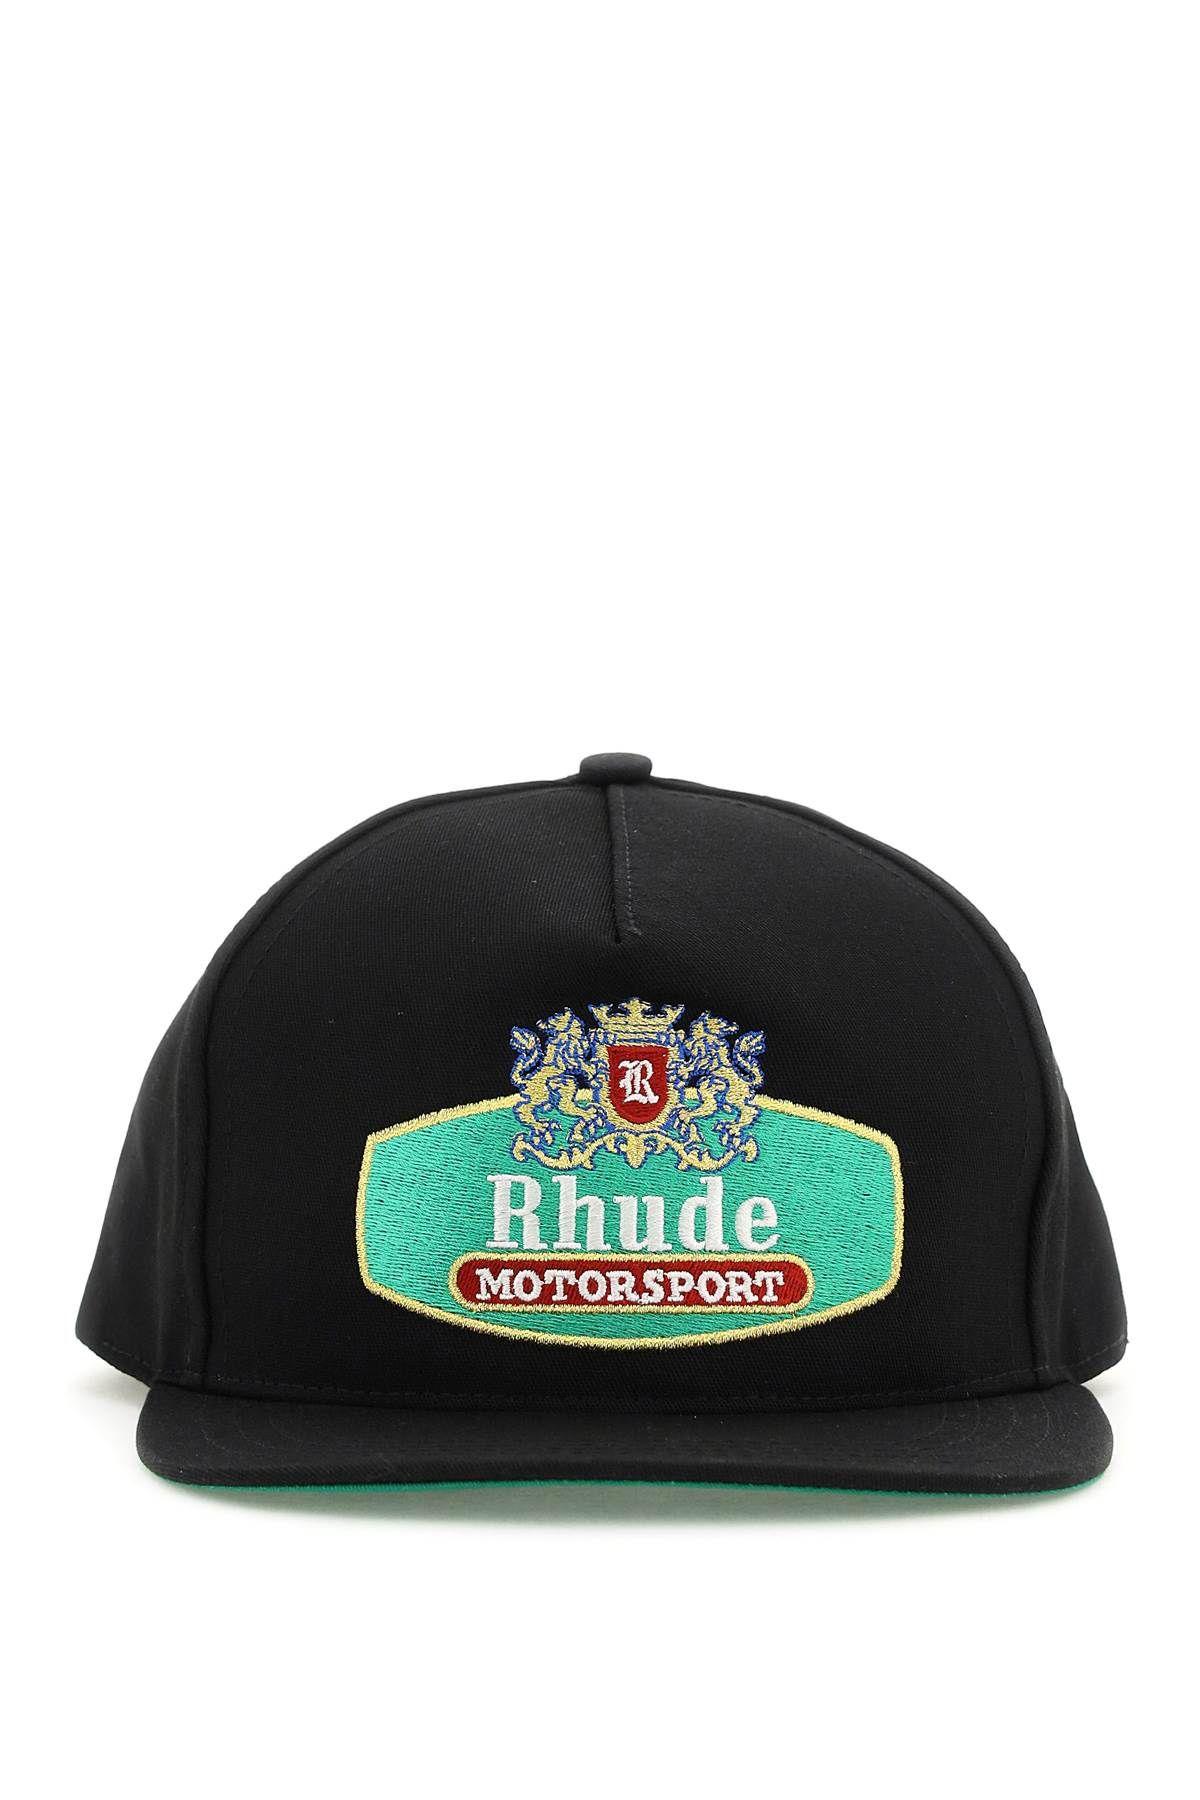 Rhude racing Crest Baseball Hat